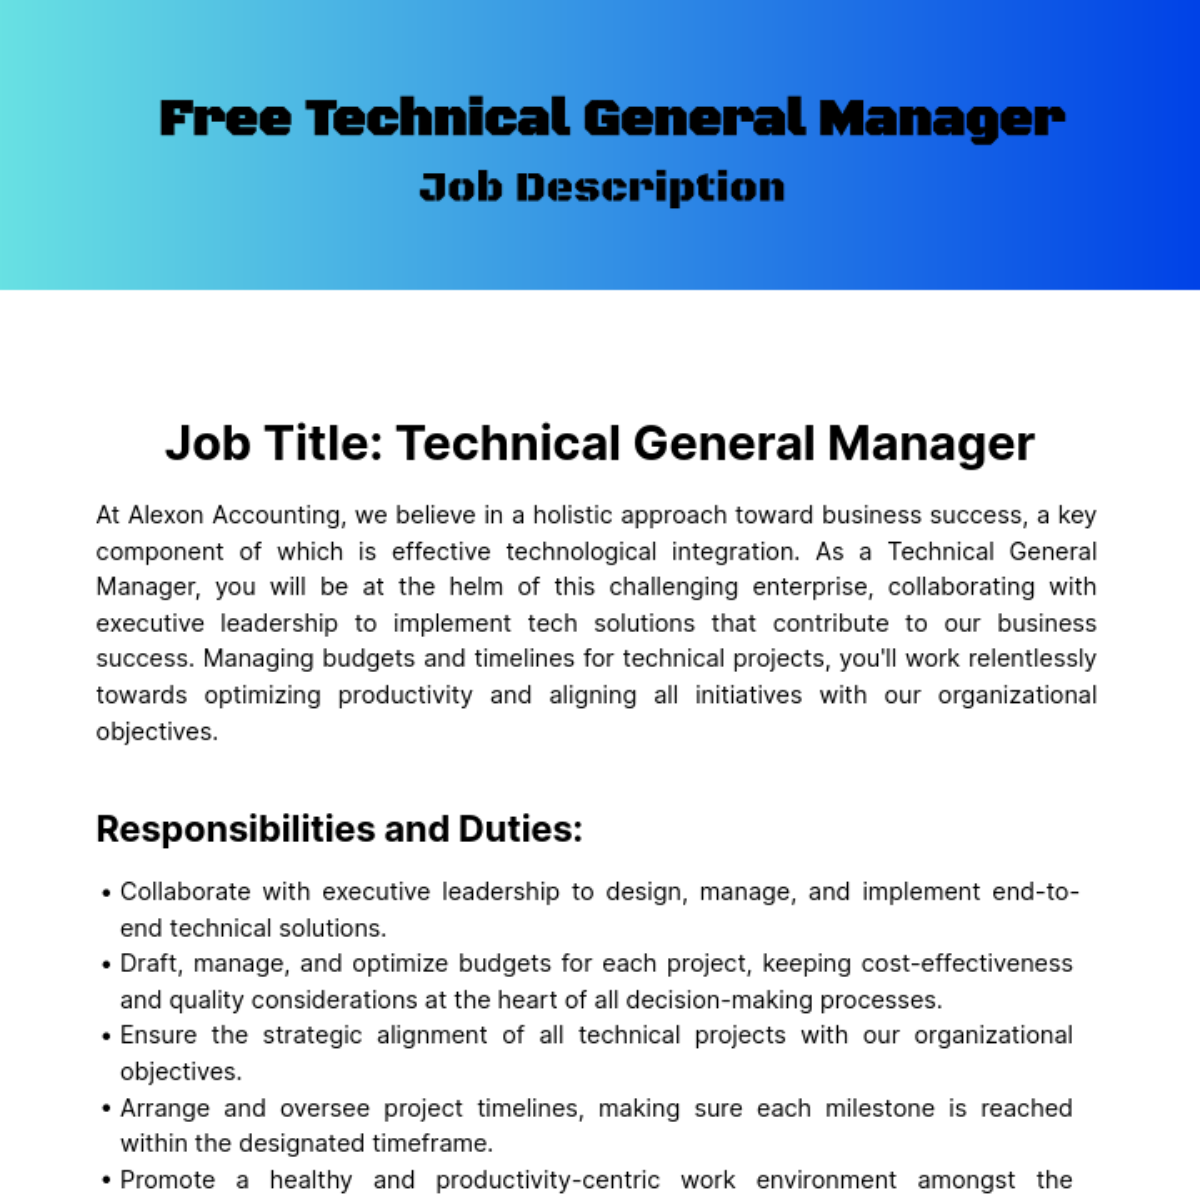 Technical General Manager Job Description Template